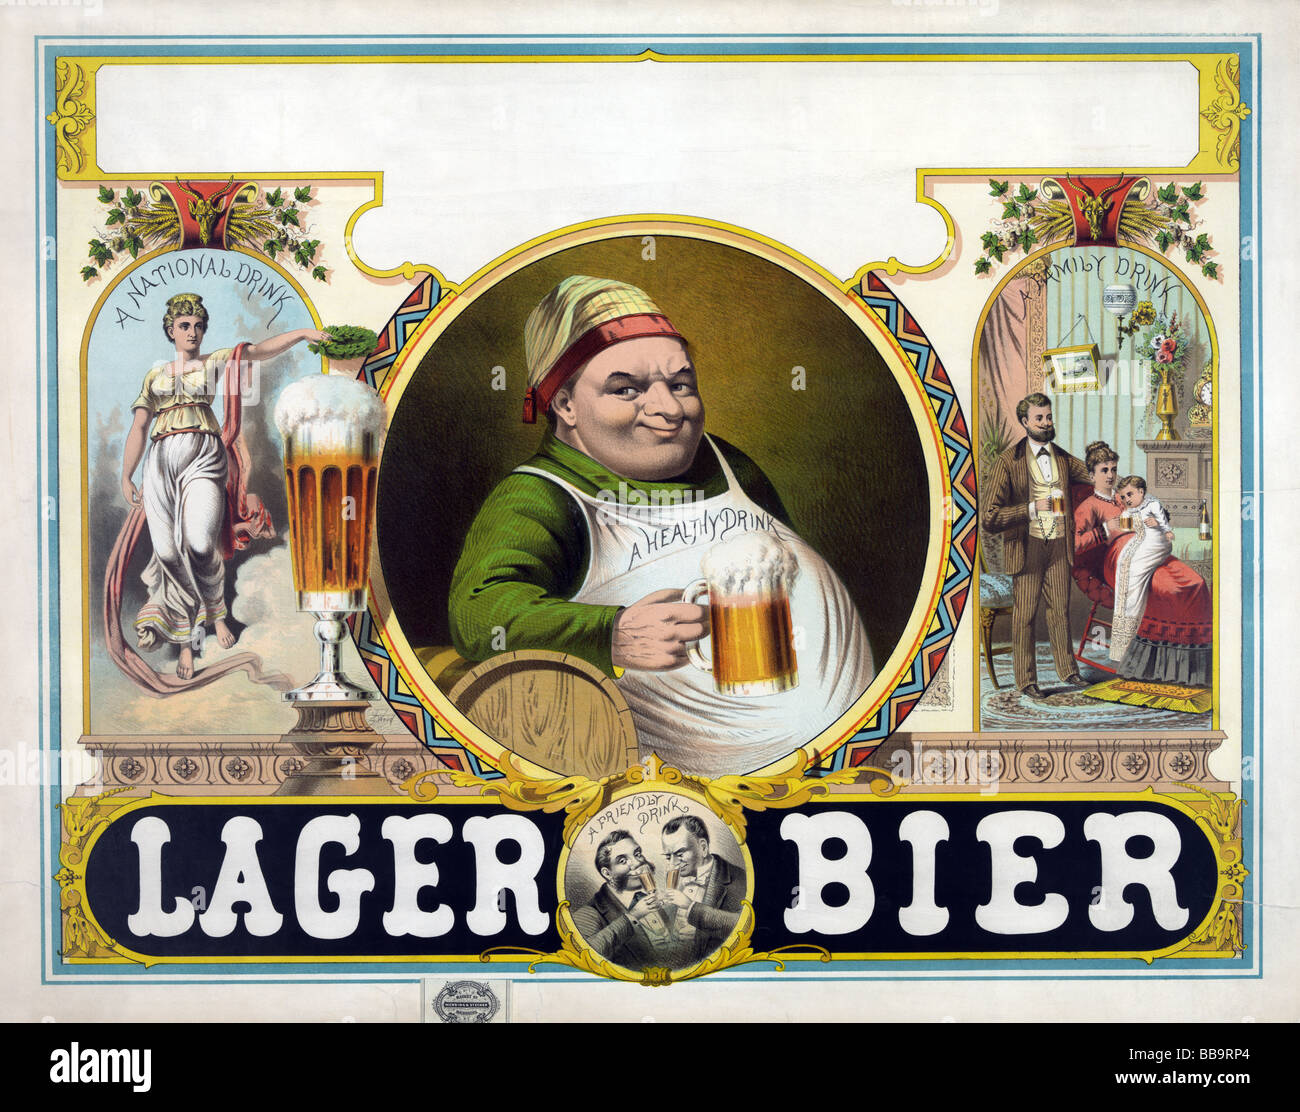 Ende des neunzehnten Jahrhunderts (ca. 1879) Lithographie Plakatwerbung Lager Bier. Stockfoto